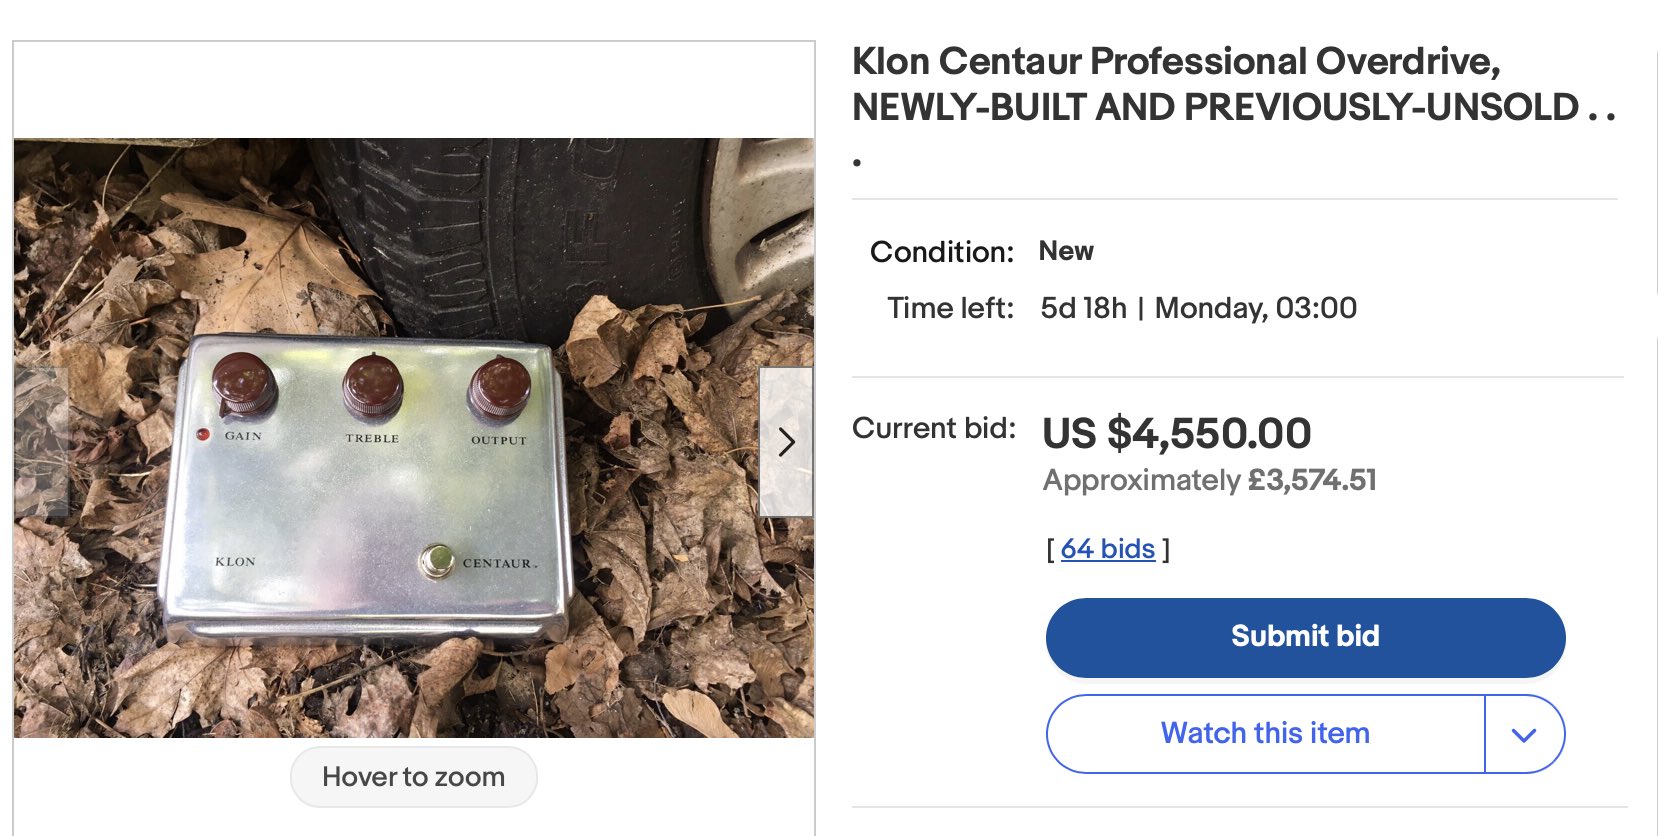 Klon eBay listing